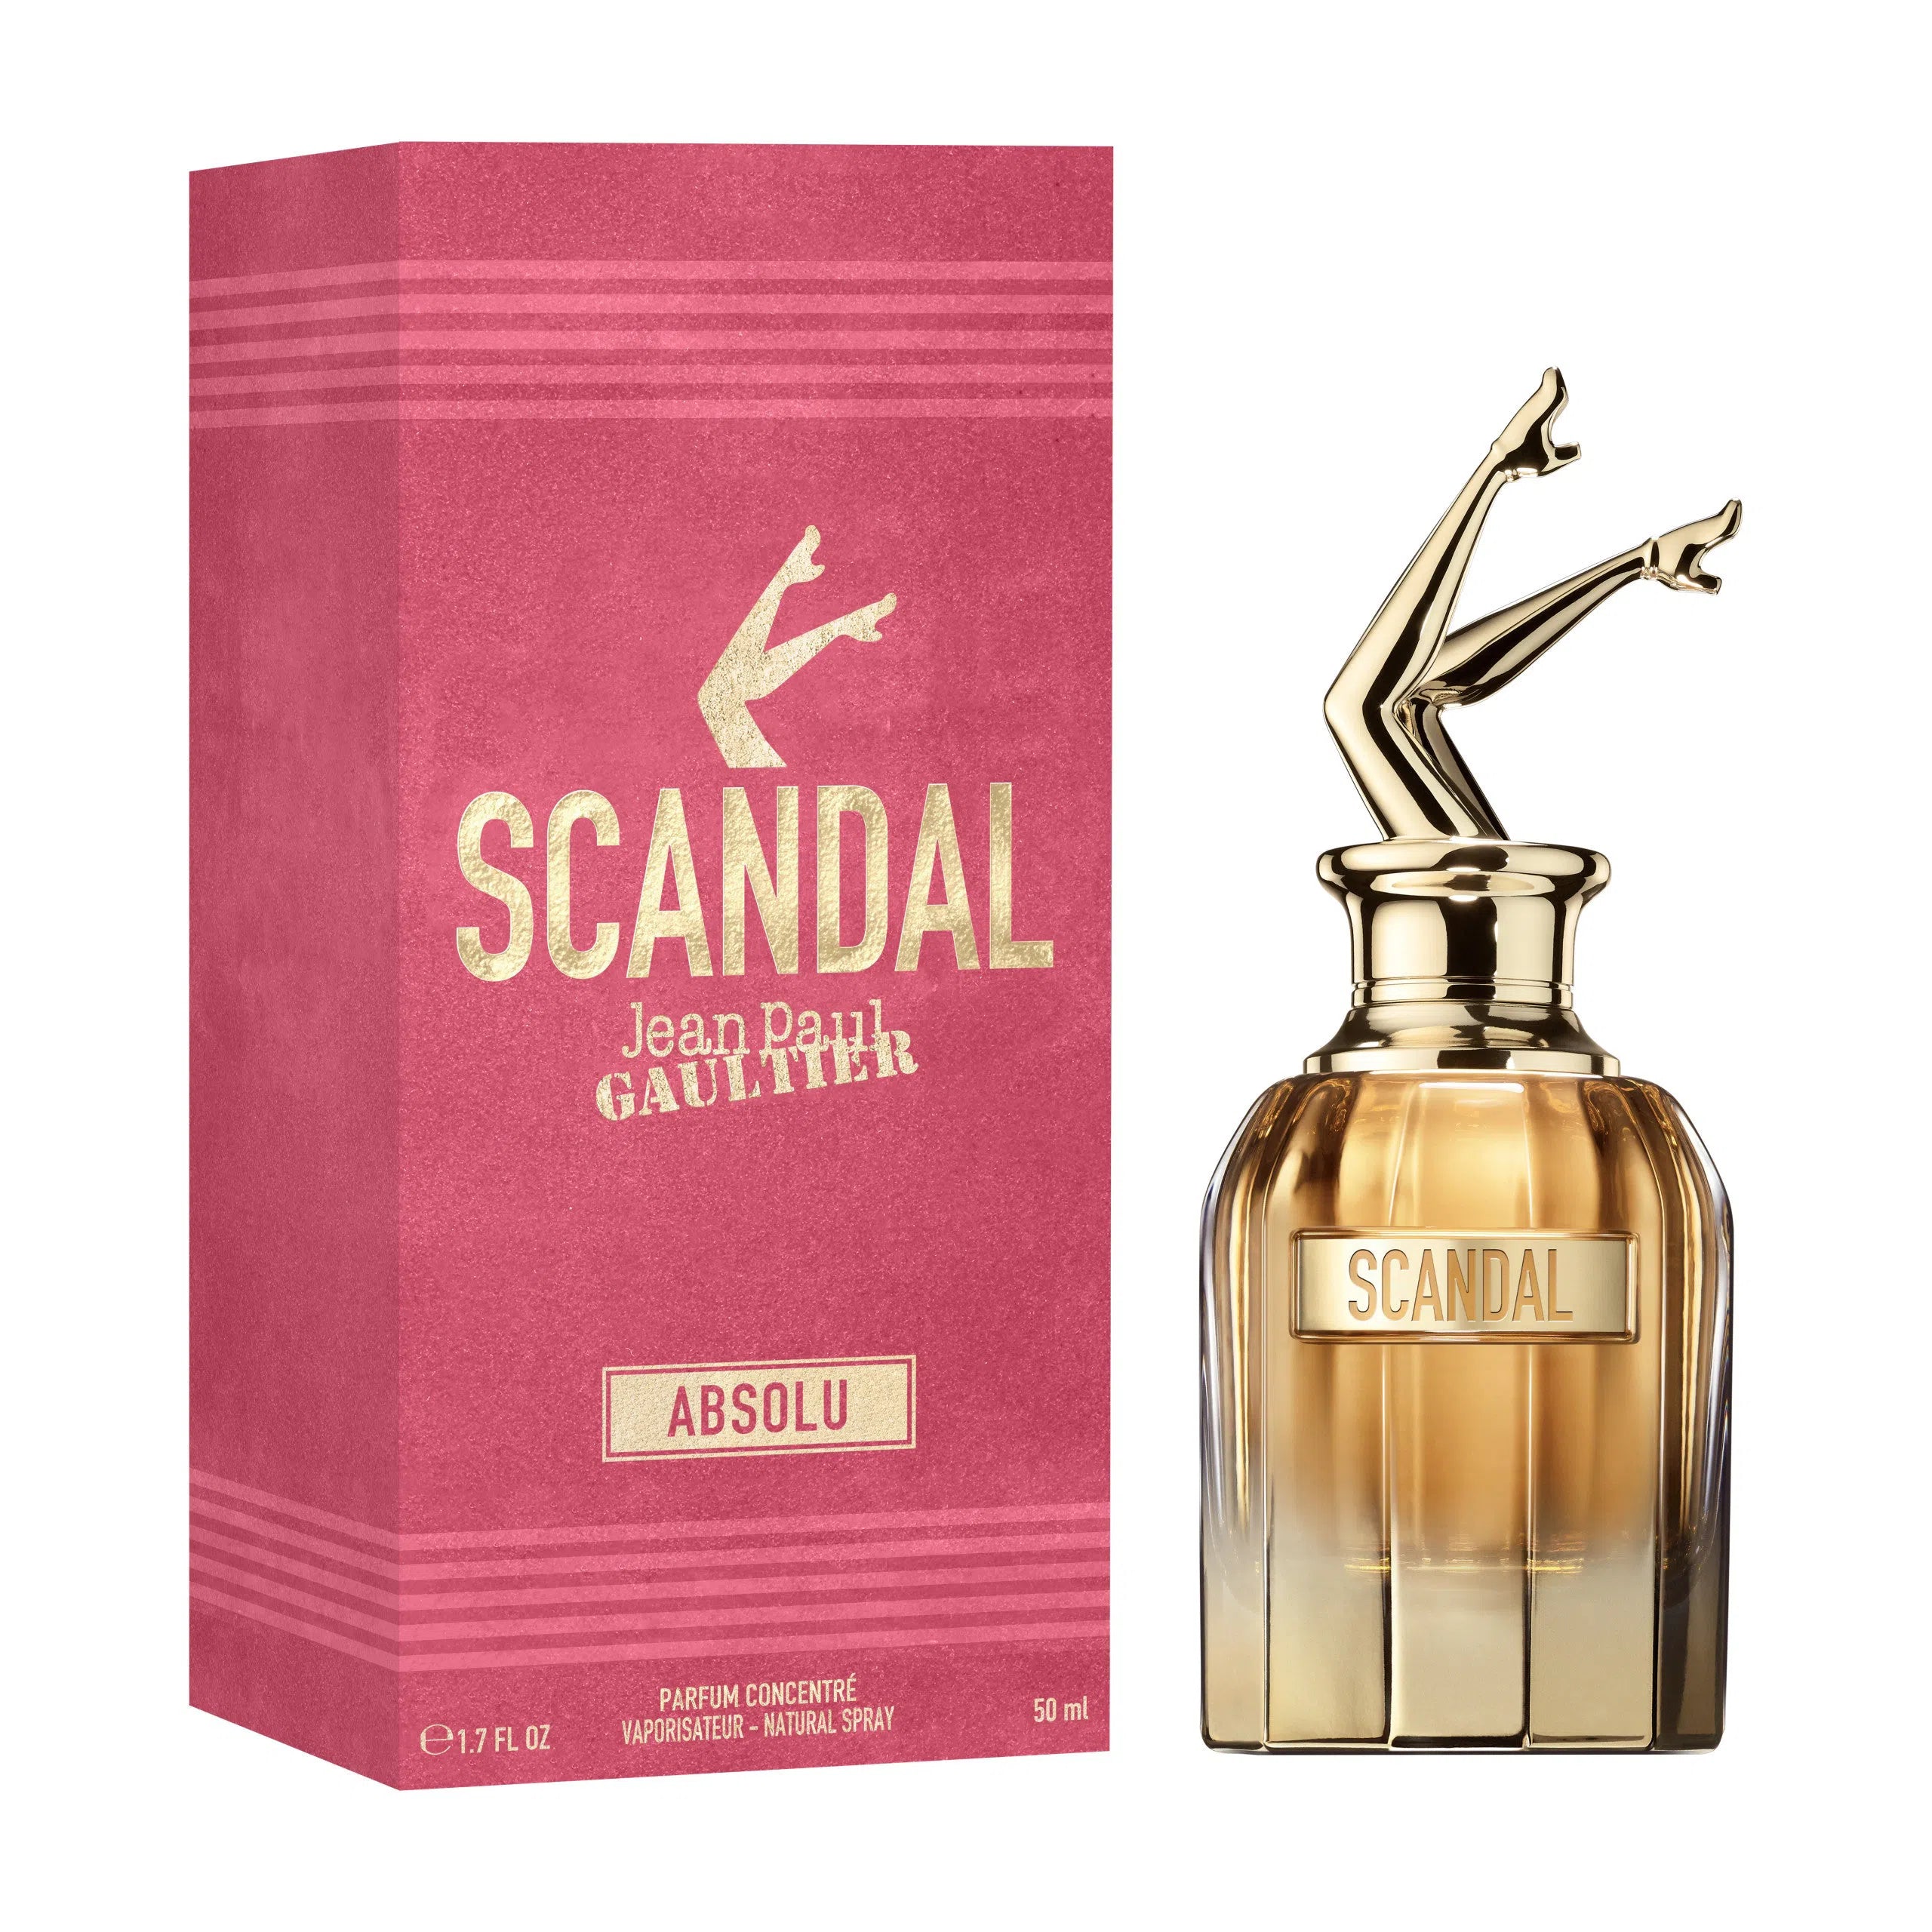 Perfume Jean Paul Gaultier Scandal Absolu Parfum (W) / 50 ml - 8435415080415- 1 - Prive Perfumes Honduras